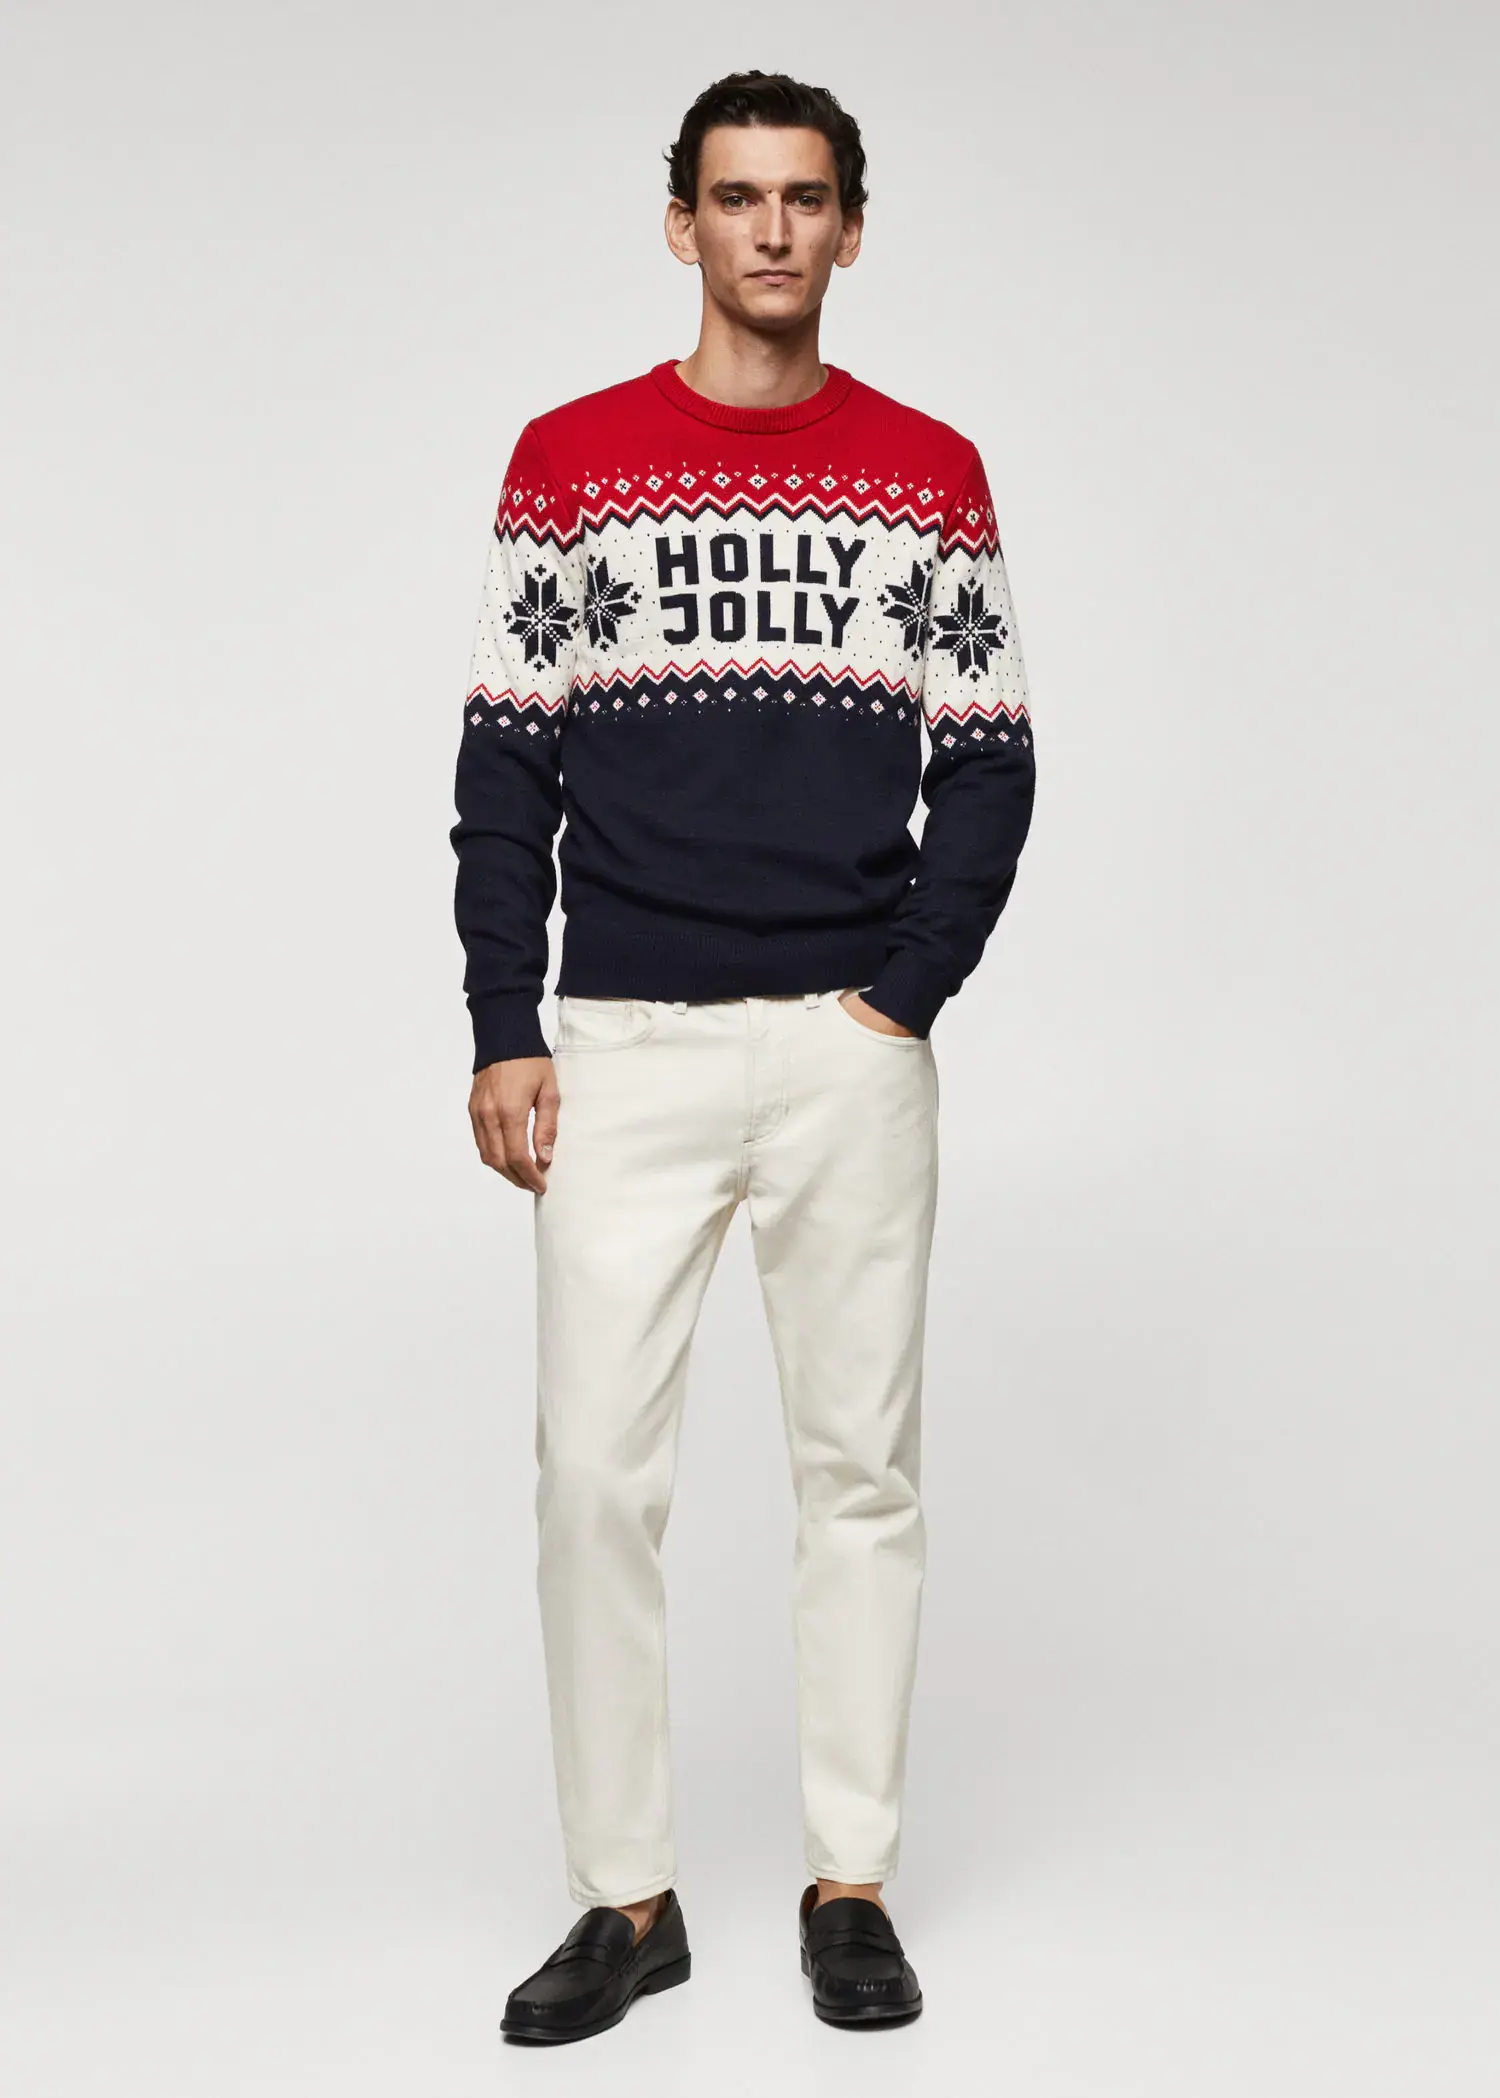 Mango Christmas jacquard sweater. 2